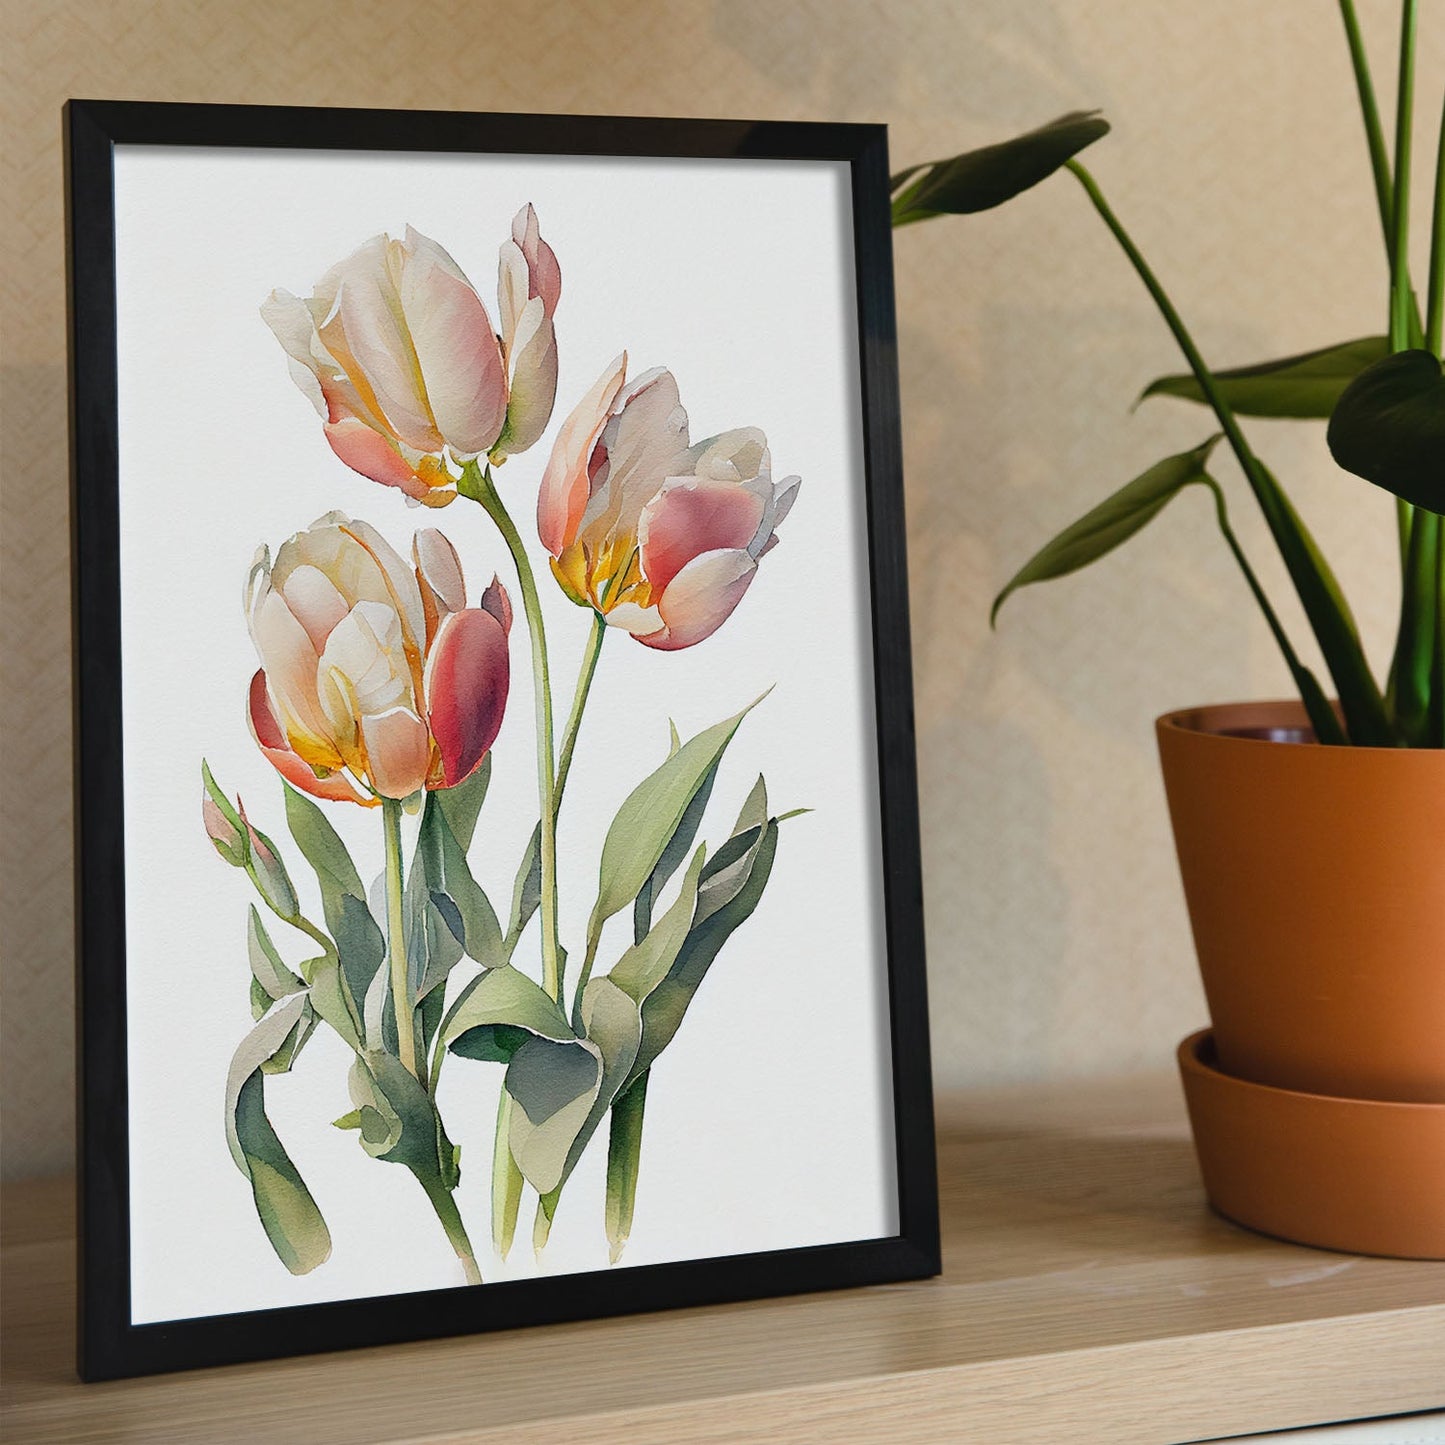 Nacnic watercolor minmal Tulipa_2. Aesthetic Wall Art Prints for Bedroom or Living Room Design.